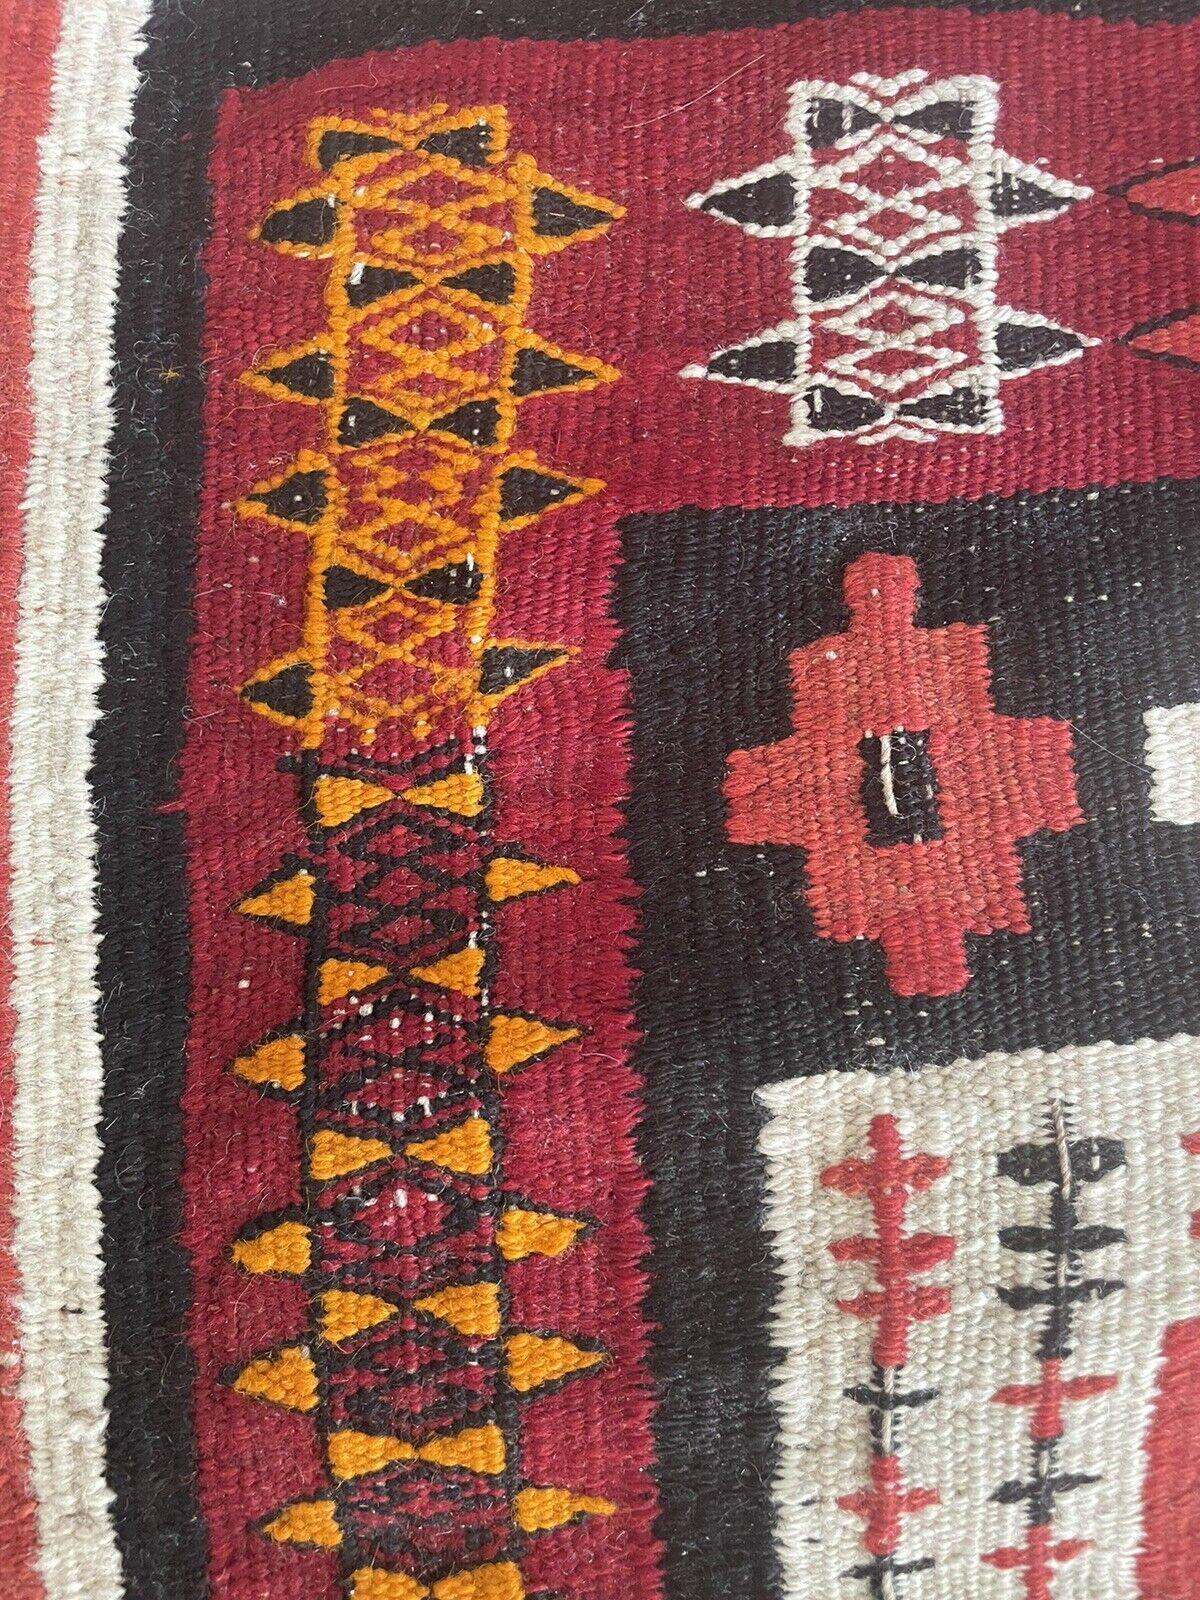 Handmade Antique Moroccan Berber Kilim Rug 1.9' x 3.1', 1920s - 1N10 For Sale 1